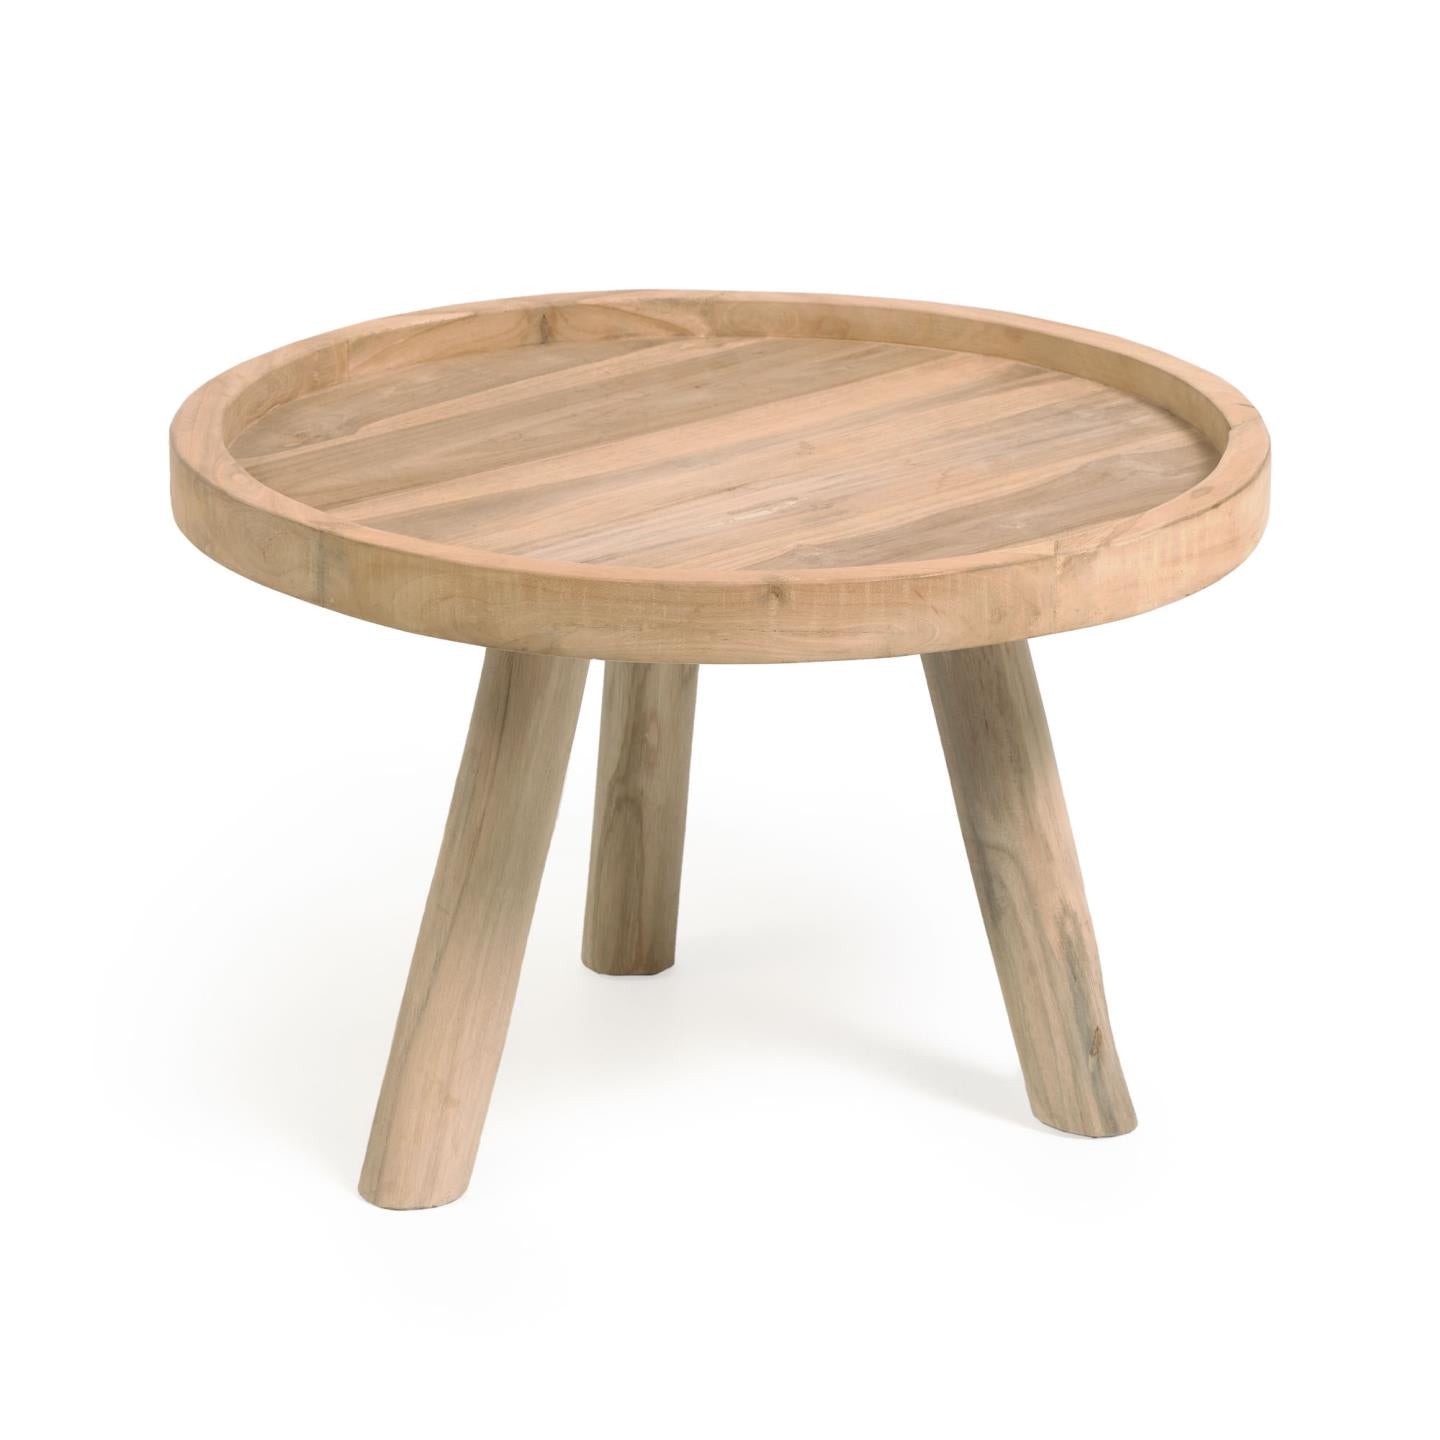 Glenda round solid teak wood coffee table, Ø 55 cm